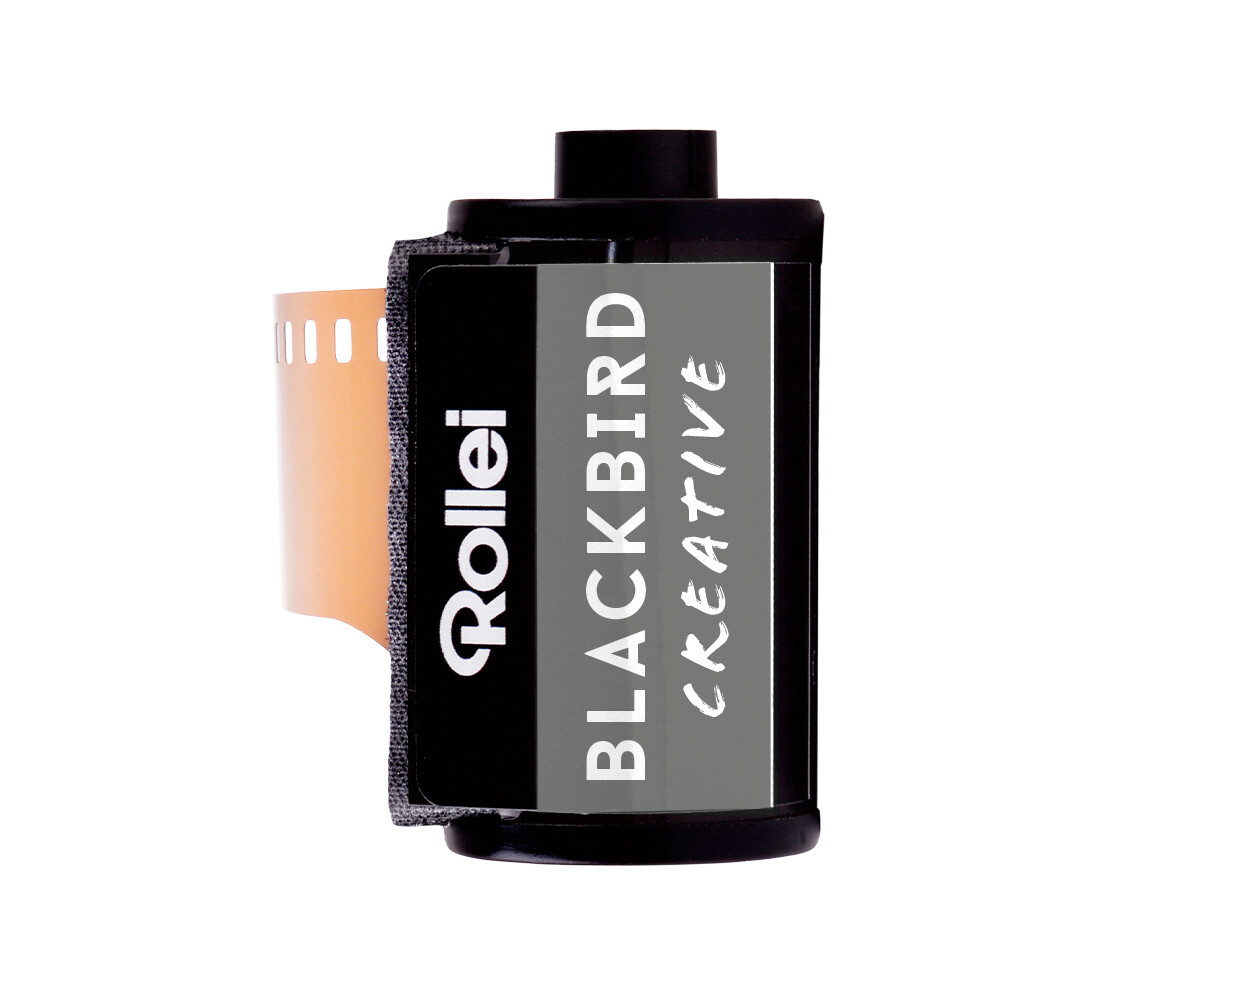 Rollei Blackbird Orthopanchromatic sensitized black-and-white negative film (135-36 Film) ISO 64/19°